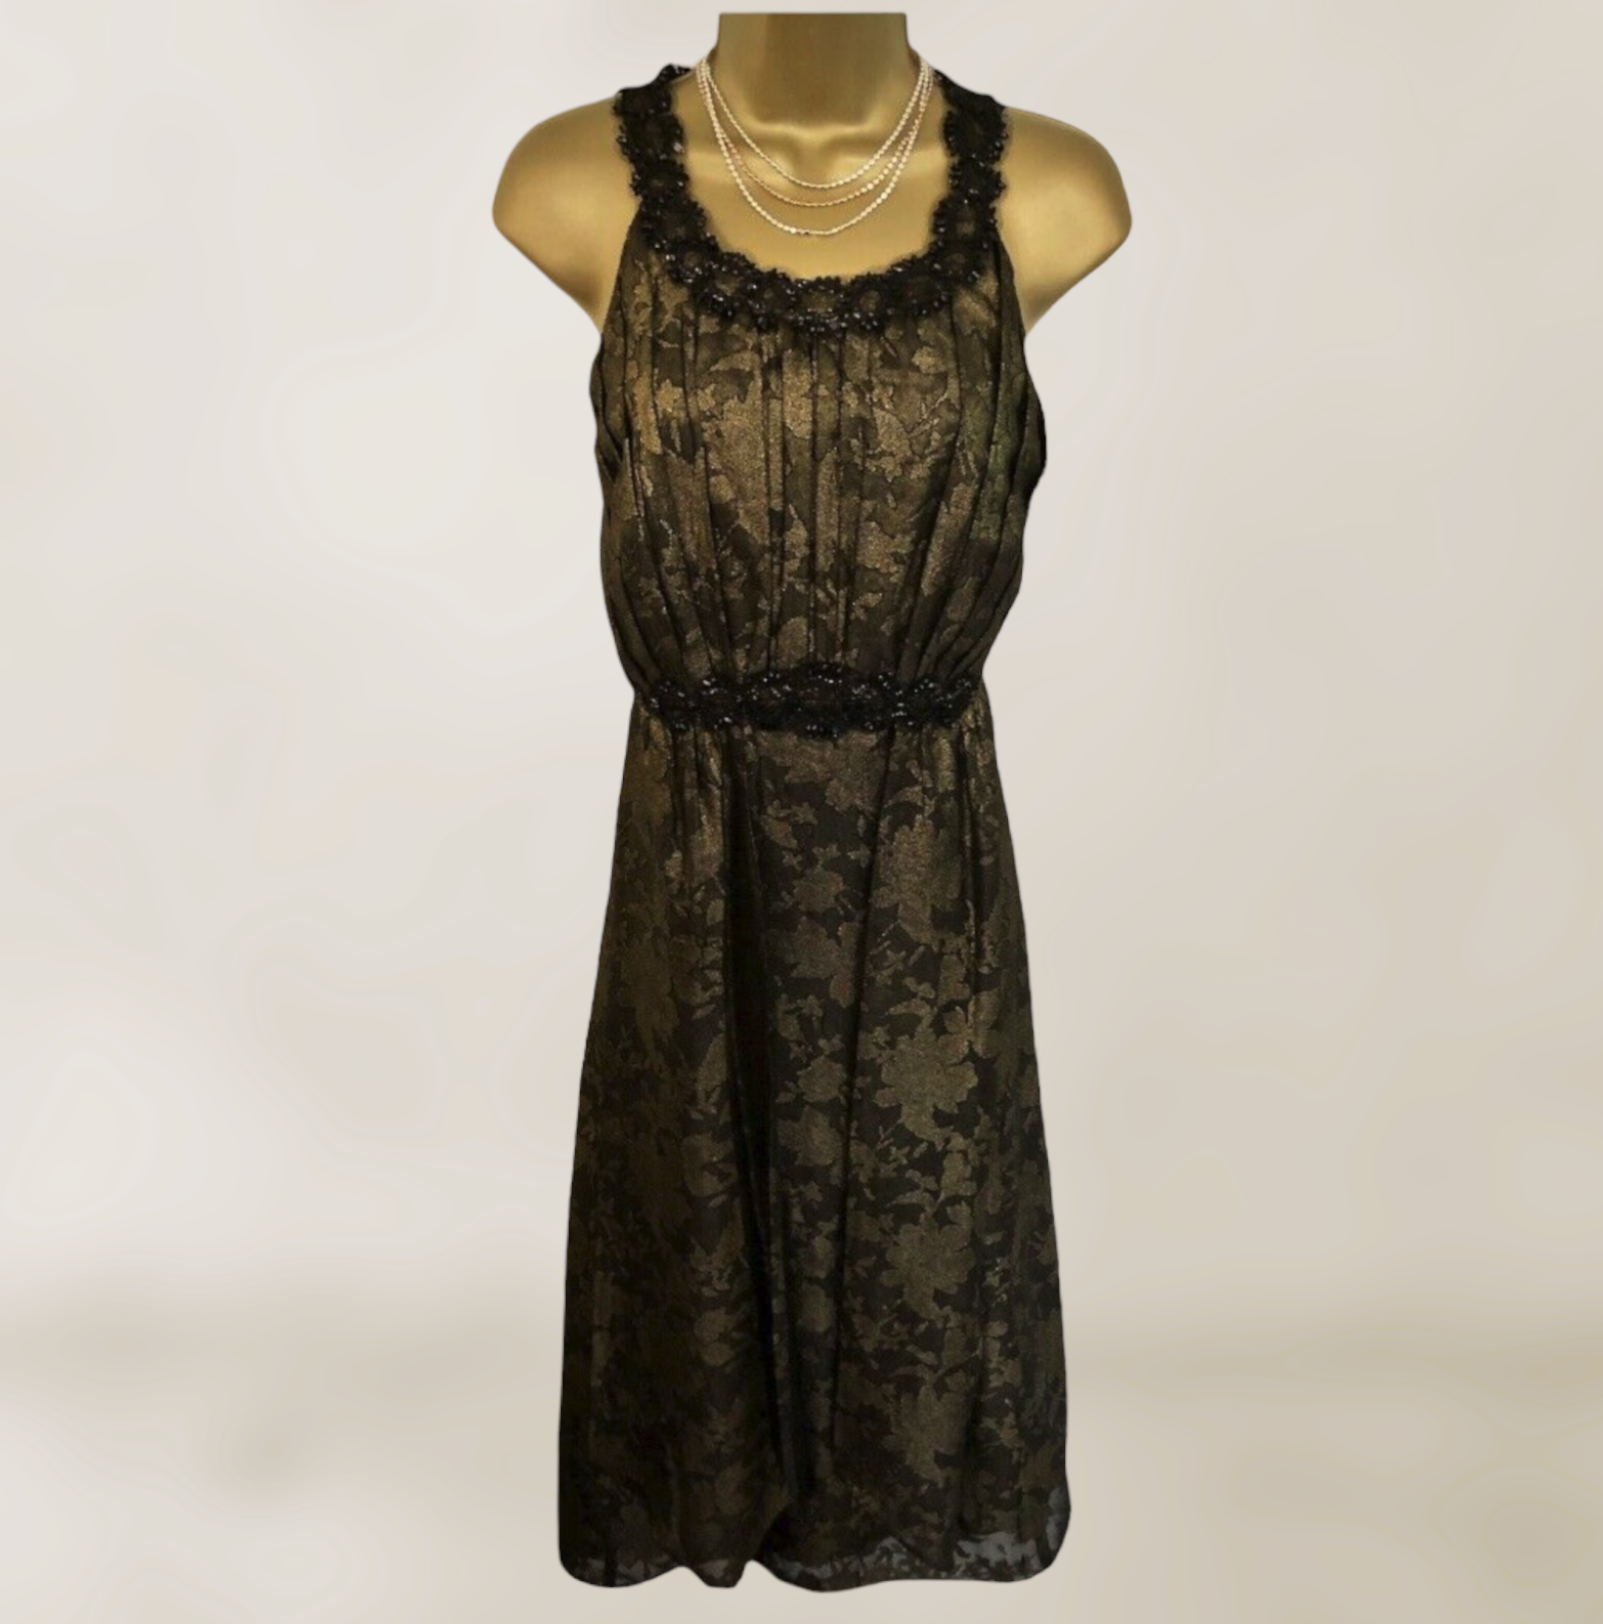 Monsoon Women's Black & Gold Lace Dress UK 18 US 14 EU 46 Timeless Fashions